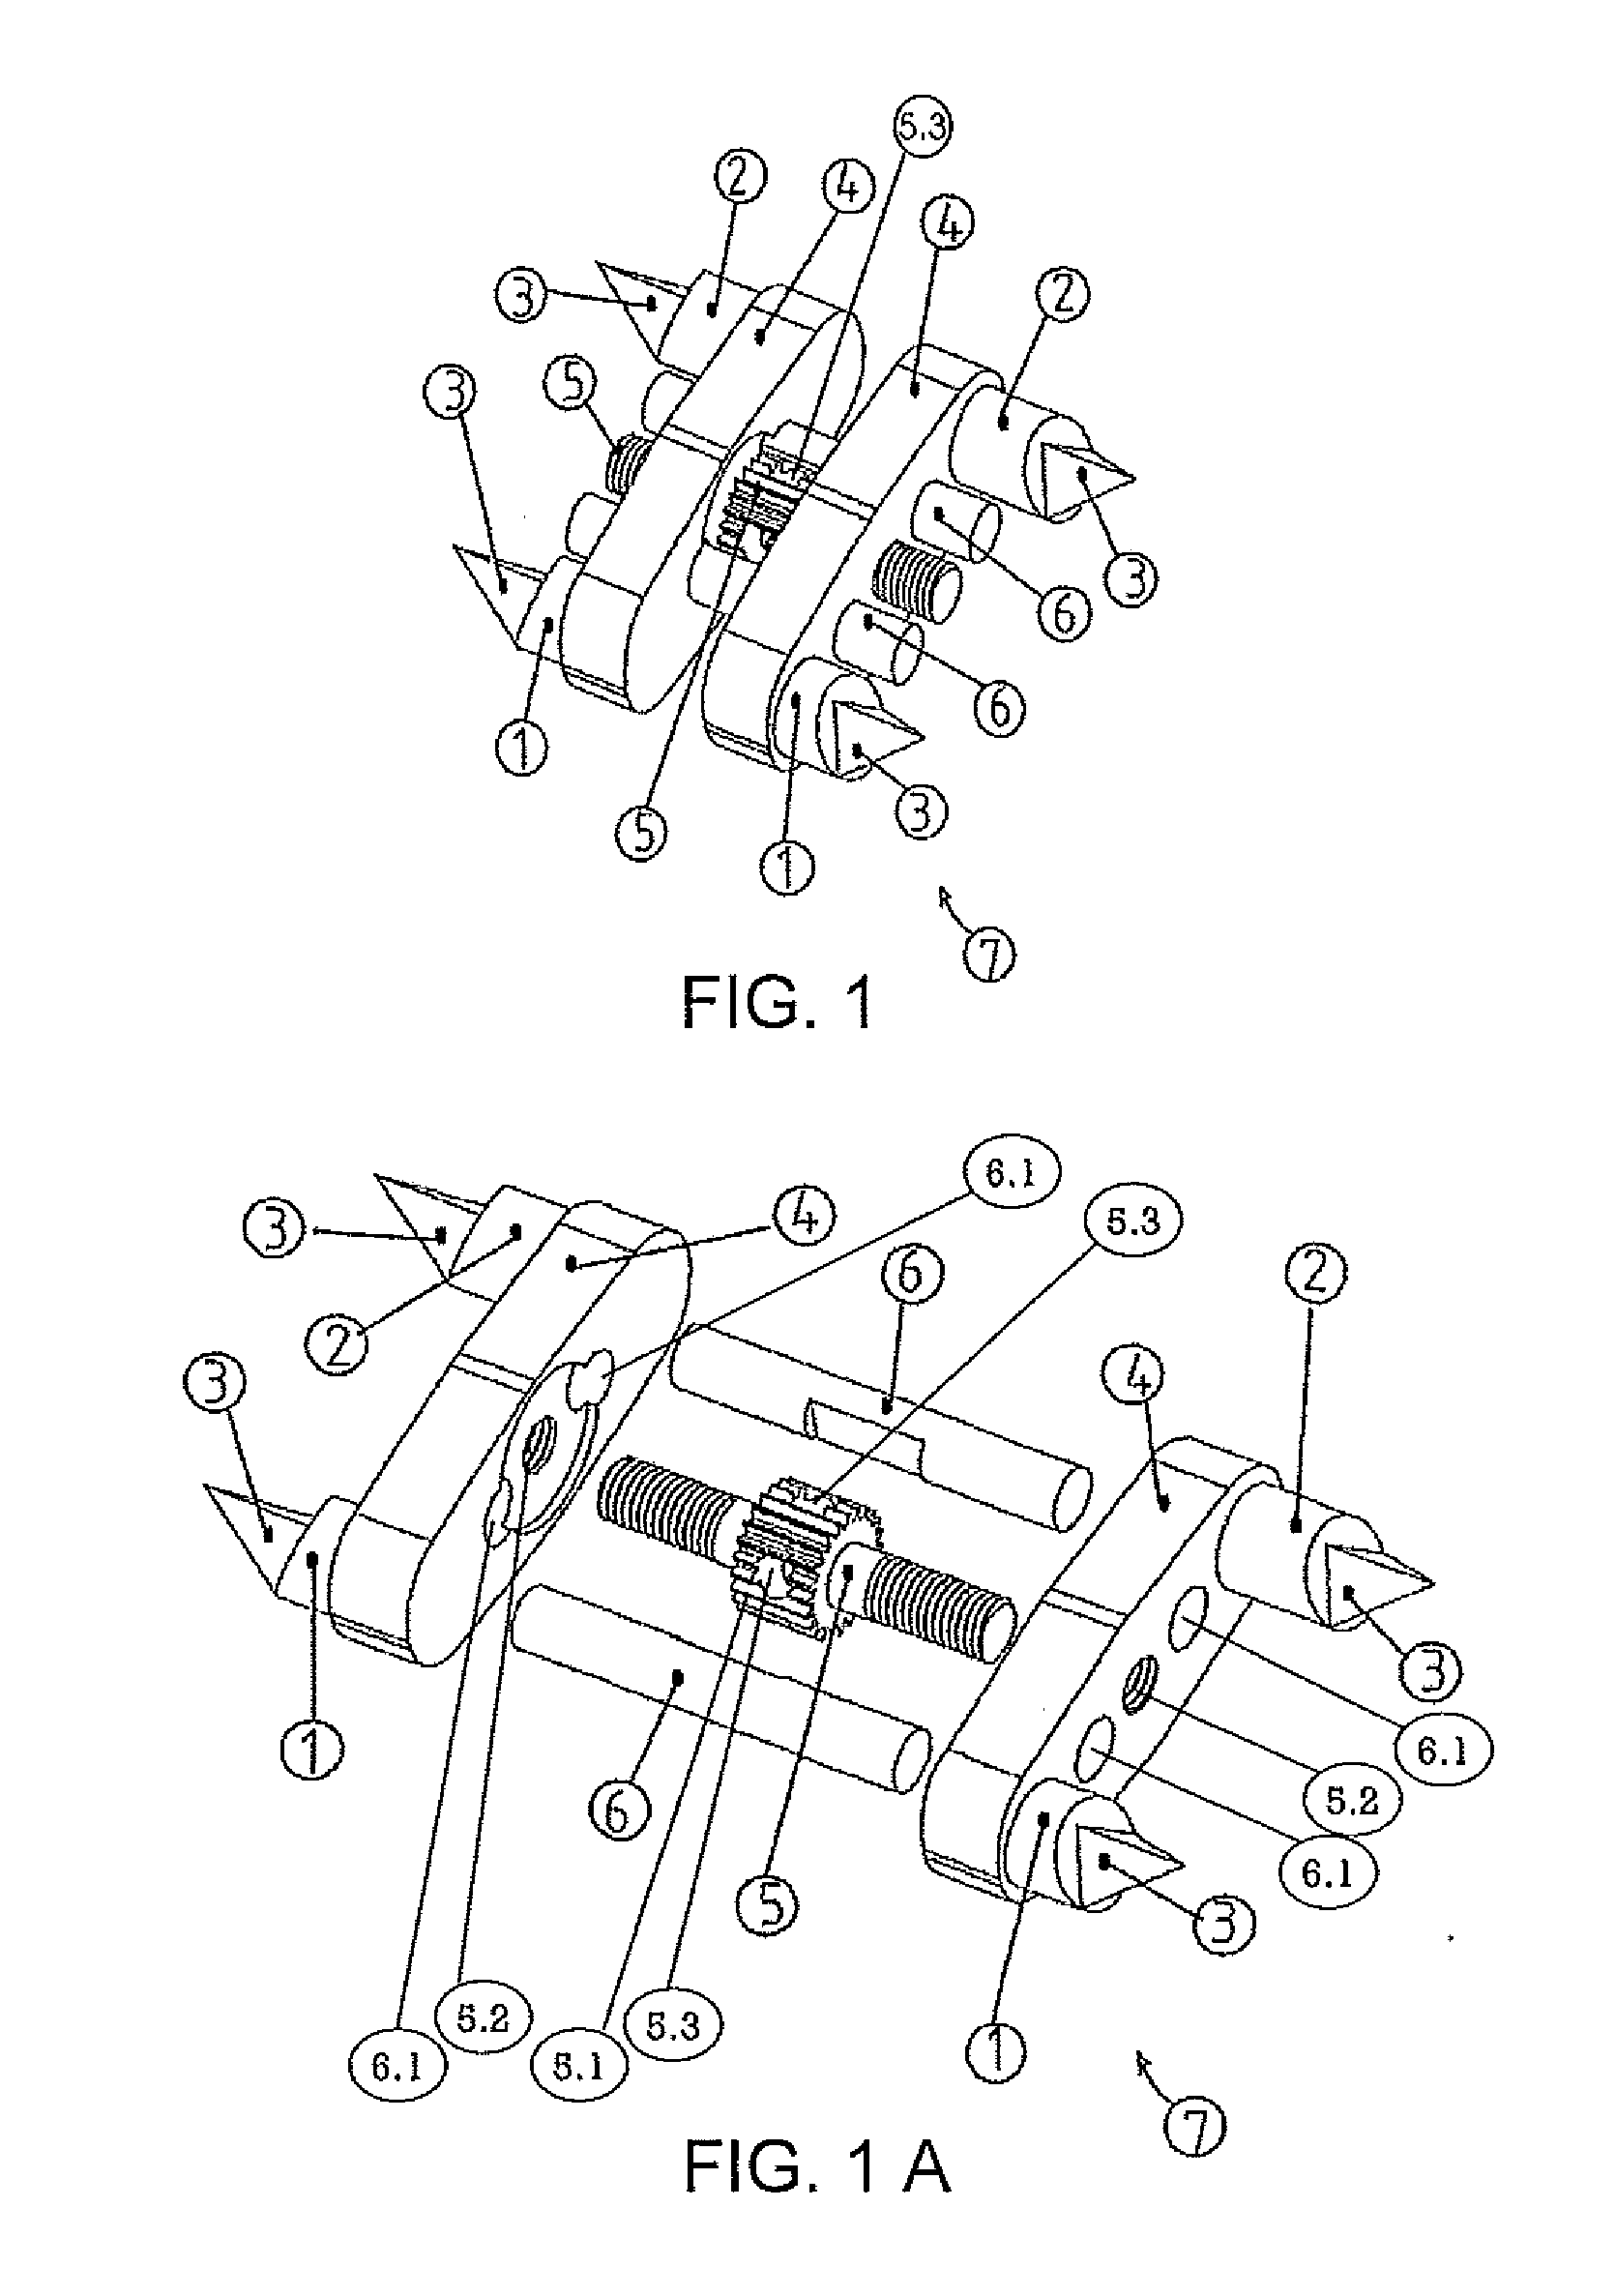 Automatic maxillary expander and transfering apparatus